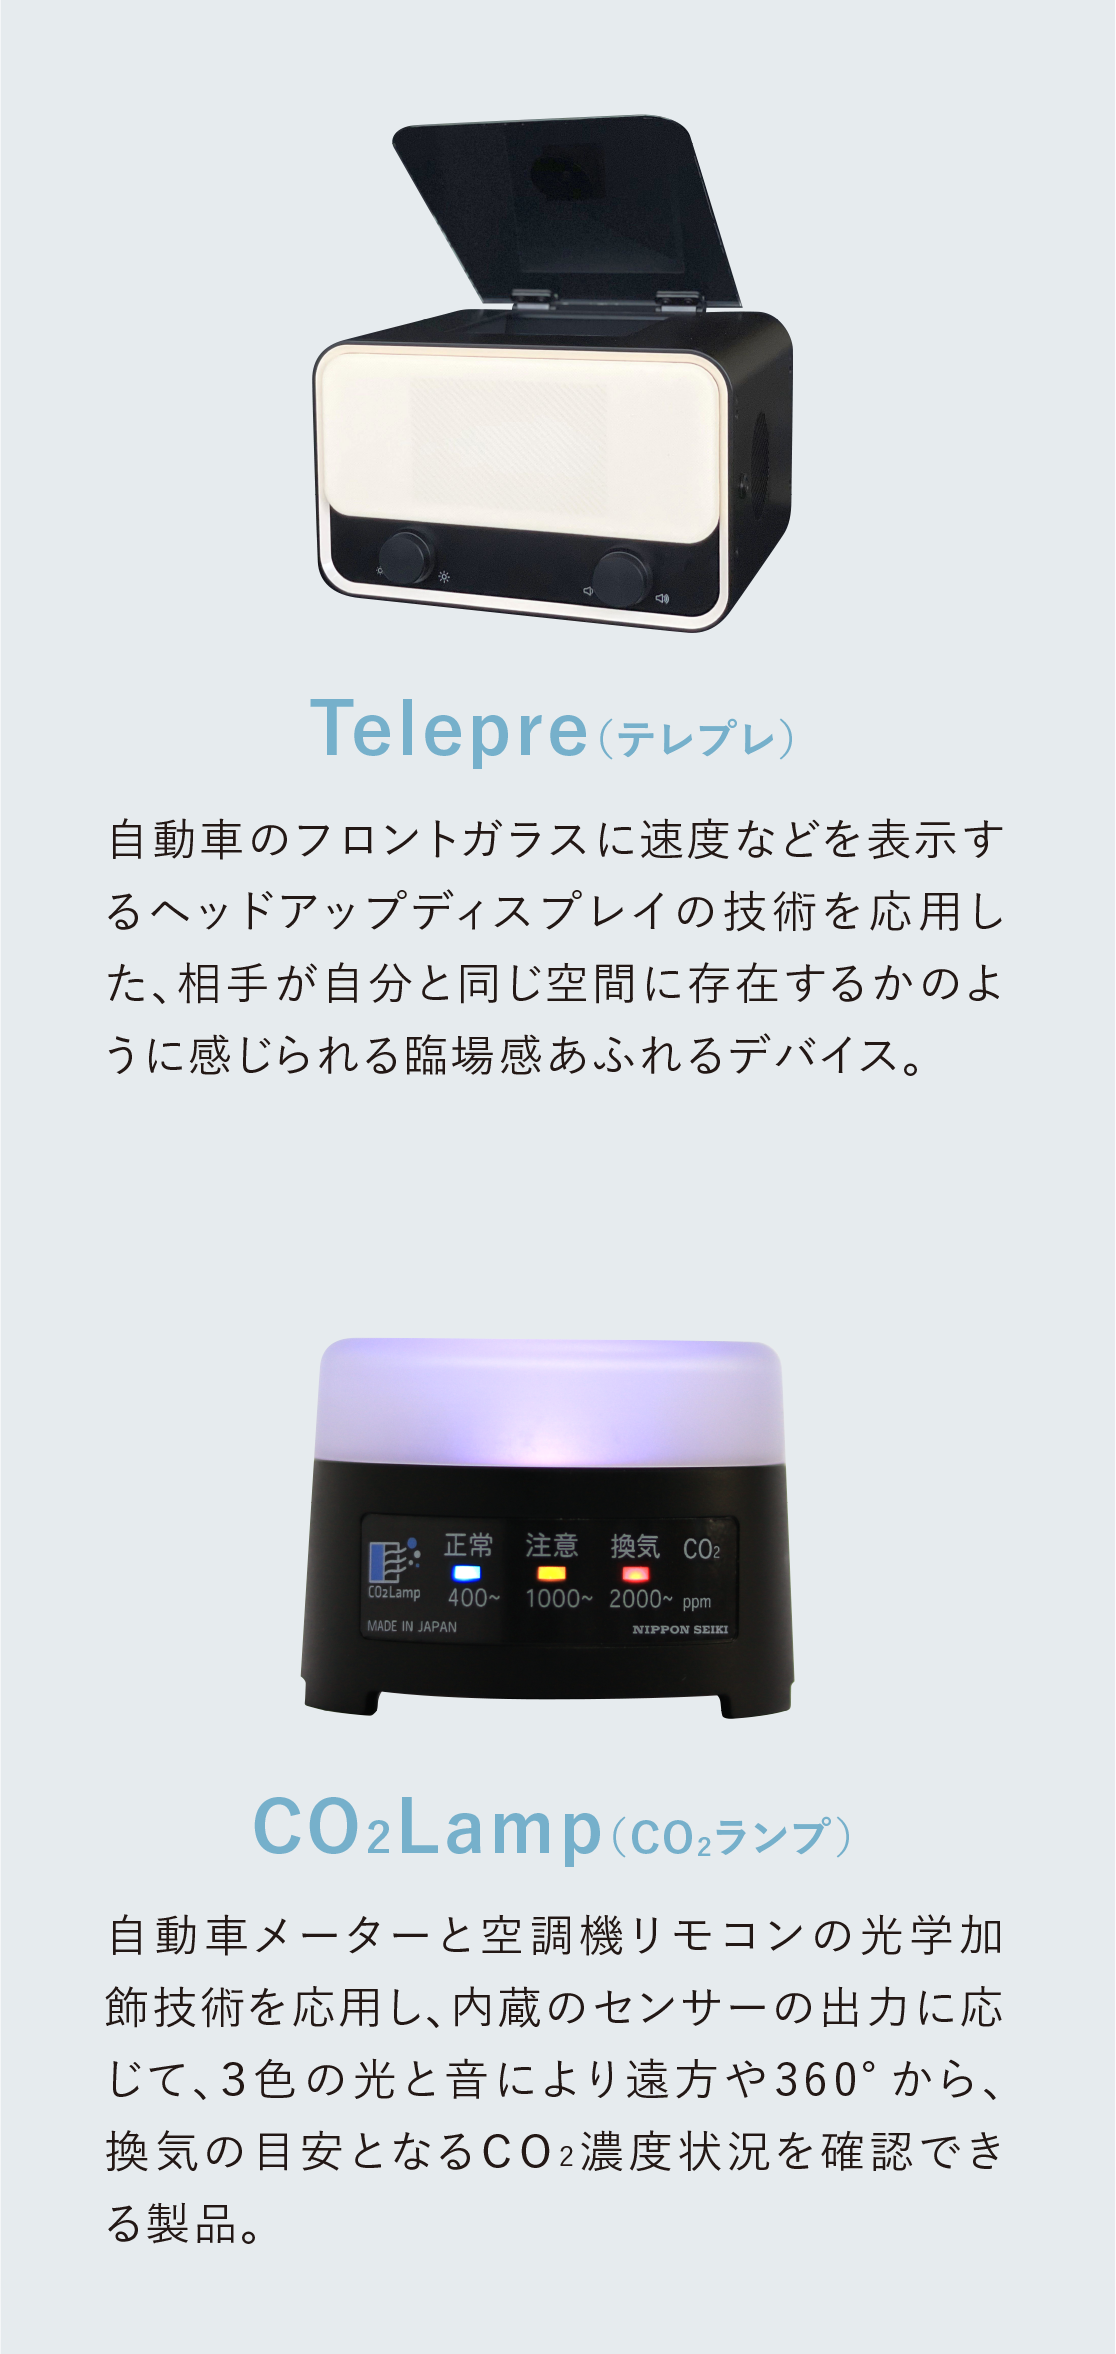 Telepre（テレプレ）/CO2Lamp（CO2ランプ）